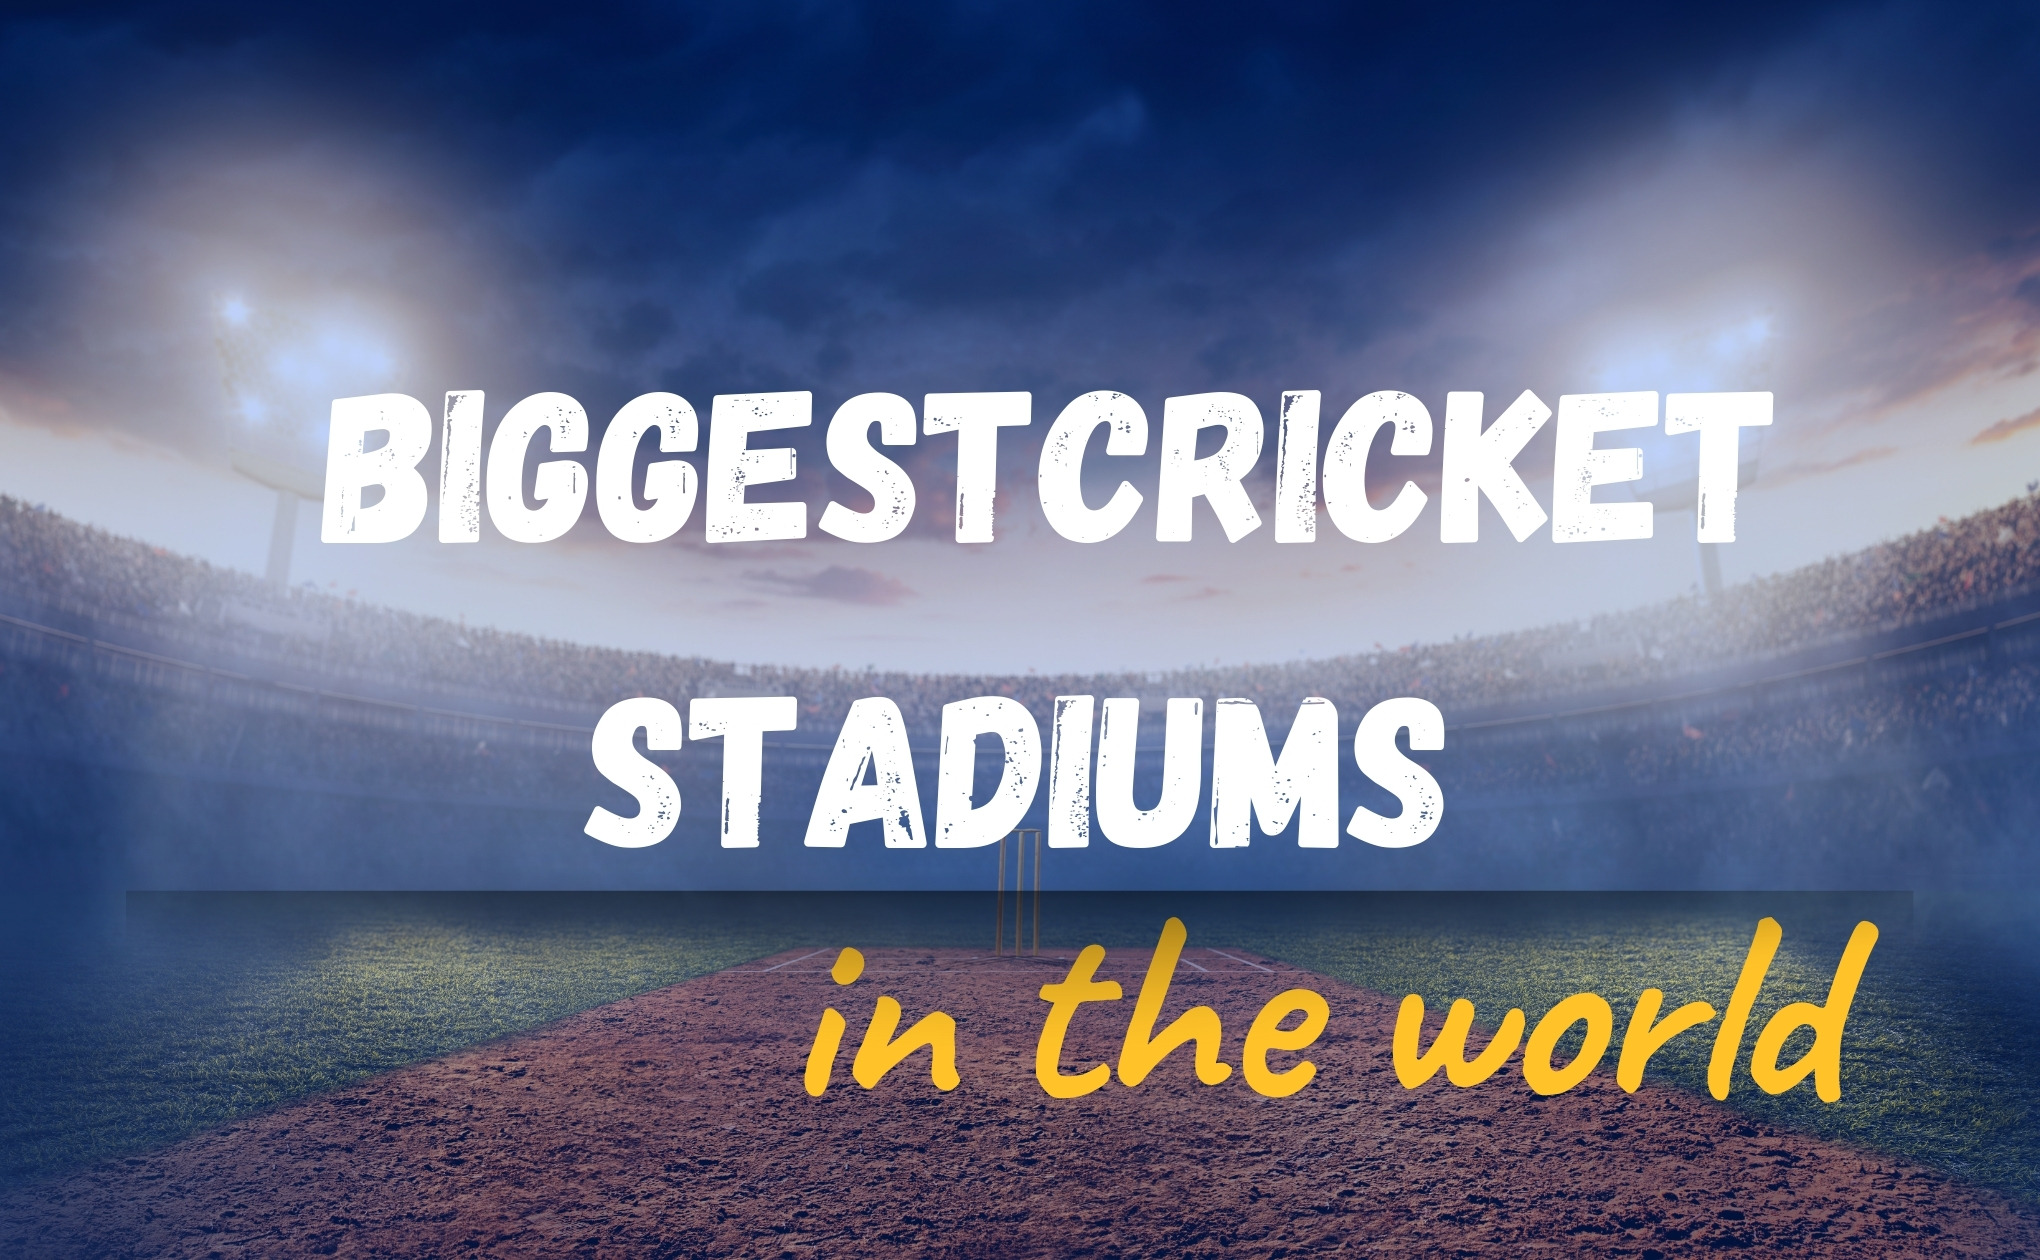 Biggest cricket stadiums